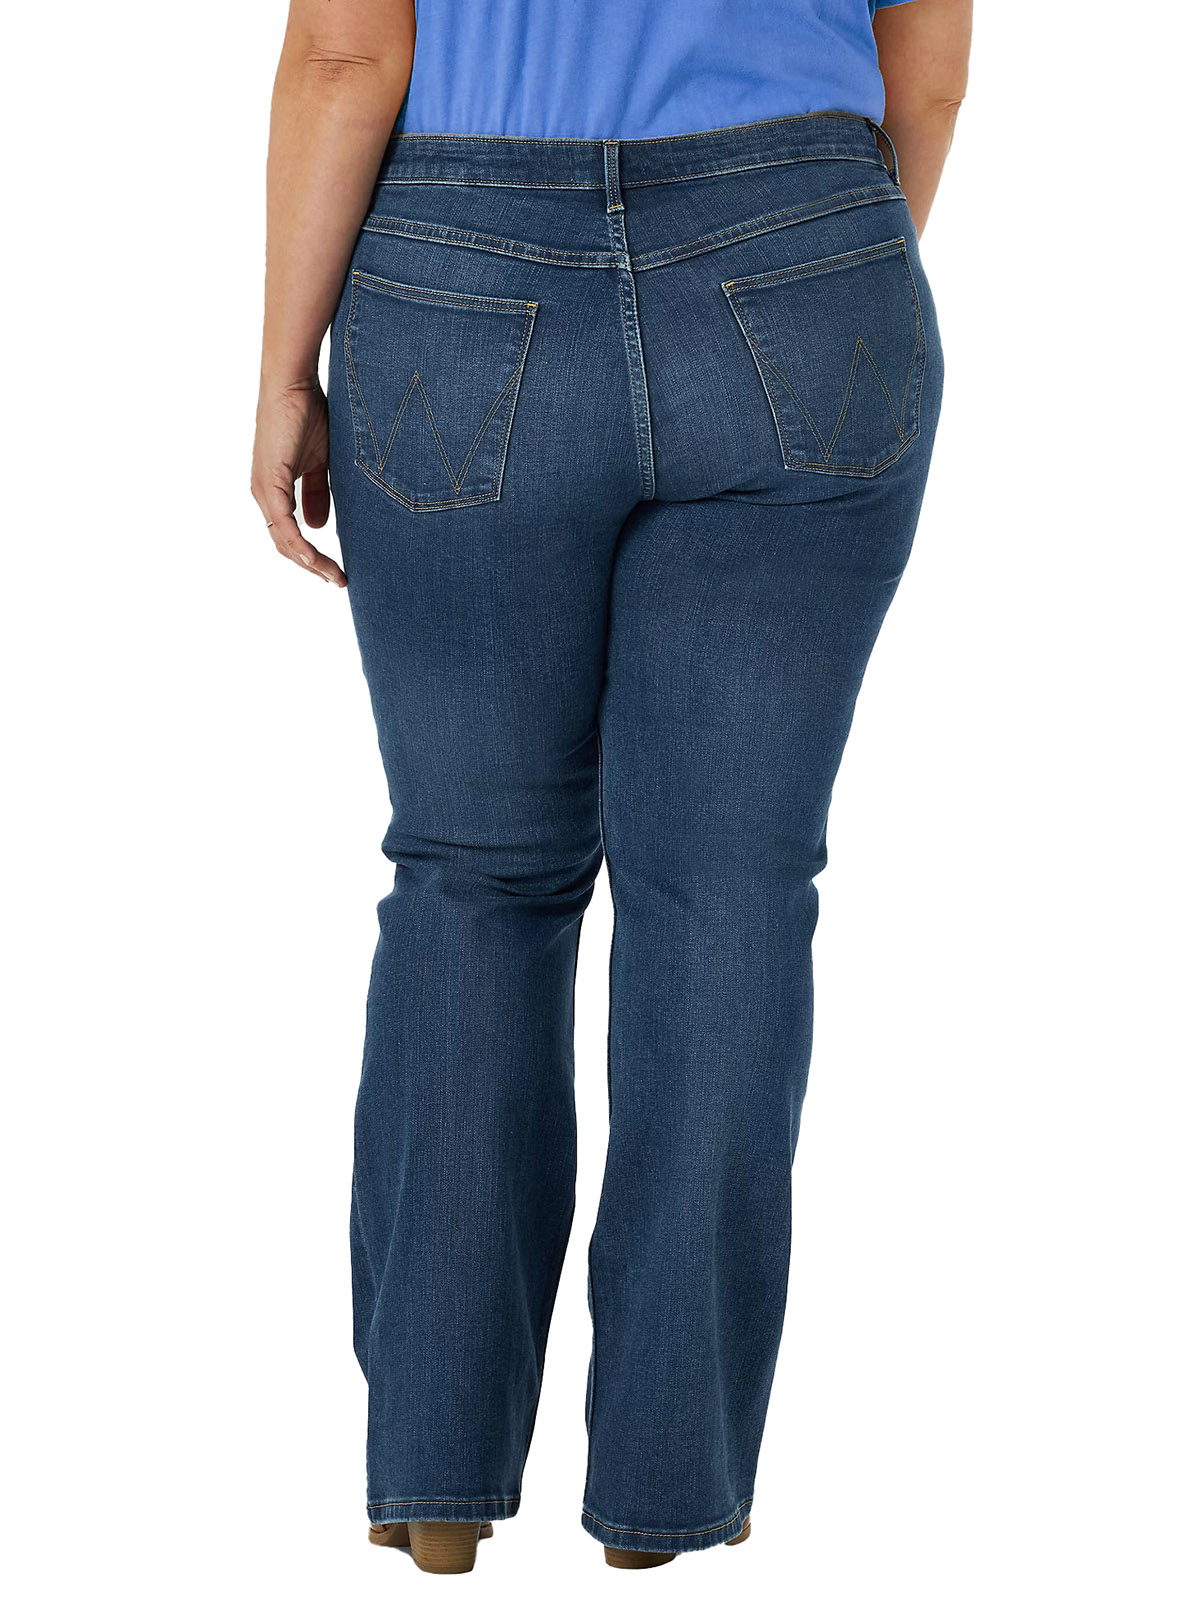 Wrangler - - WR4NGLER INDIGO High Rise Bold Boot Jeans - Plus Size 22 to 28